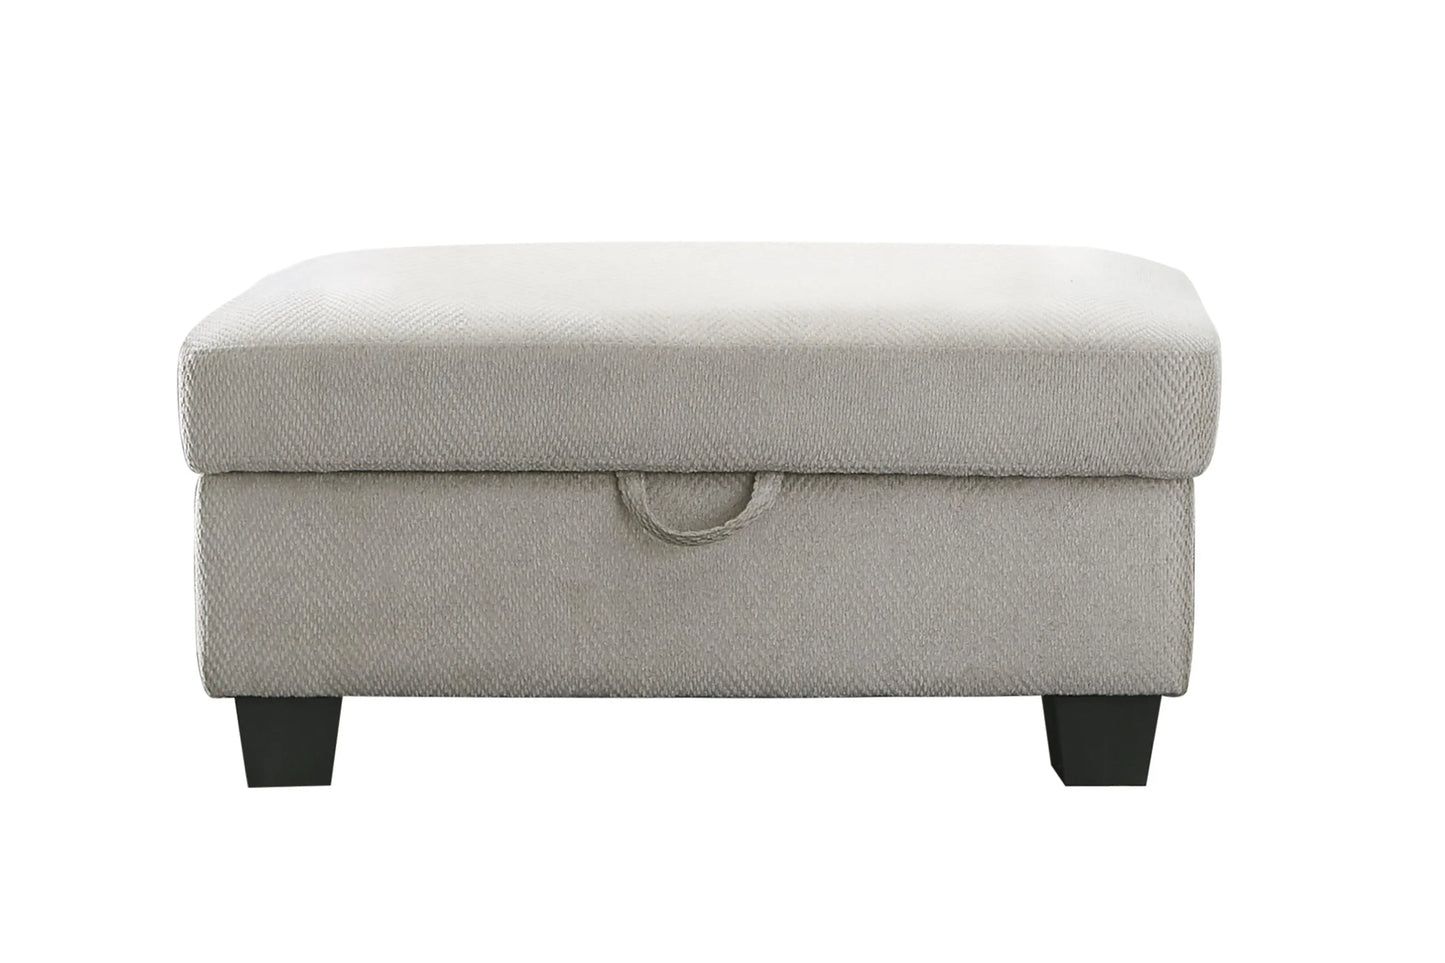 Whitson 509766 Cushion Back Upholstered Sectional - Chenille Stone